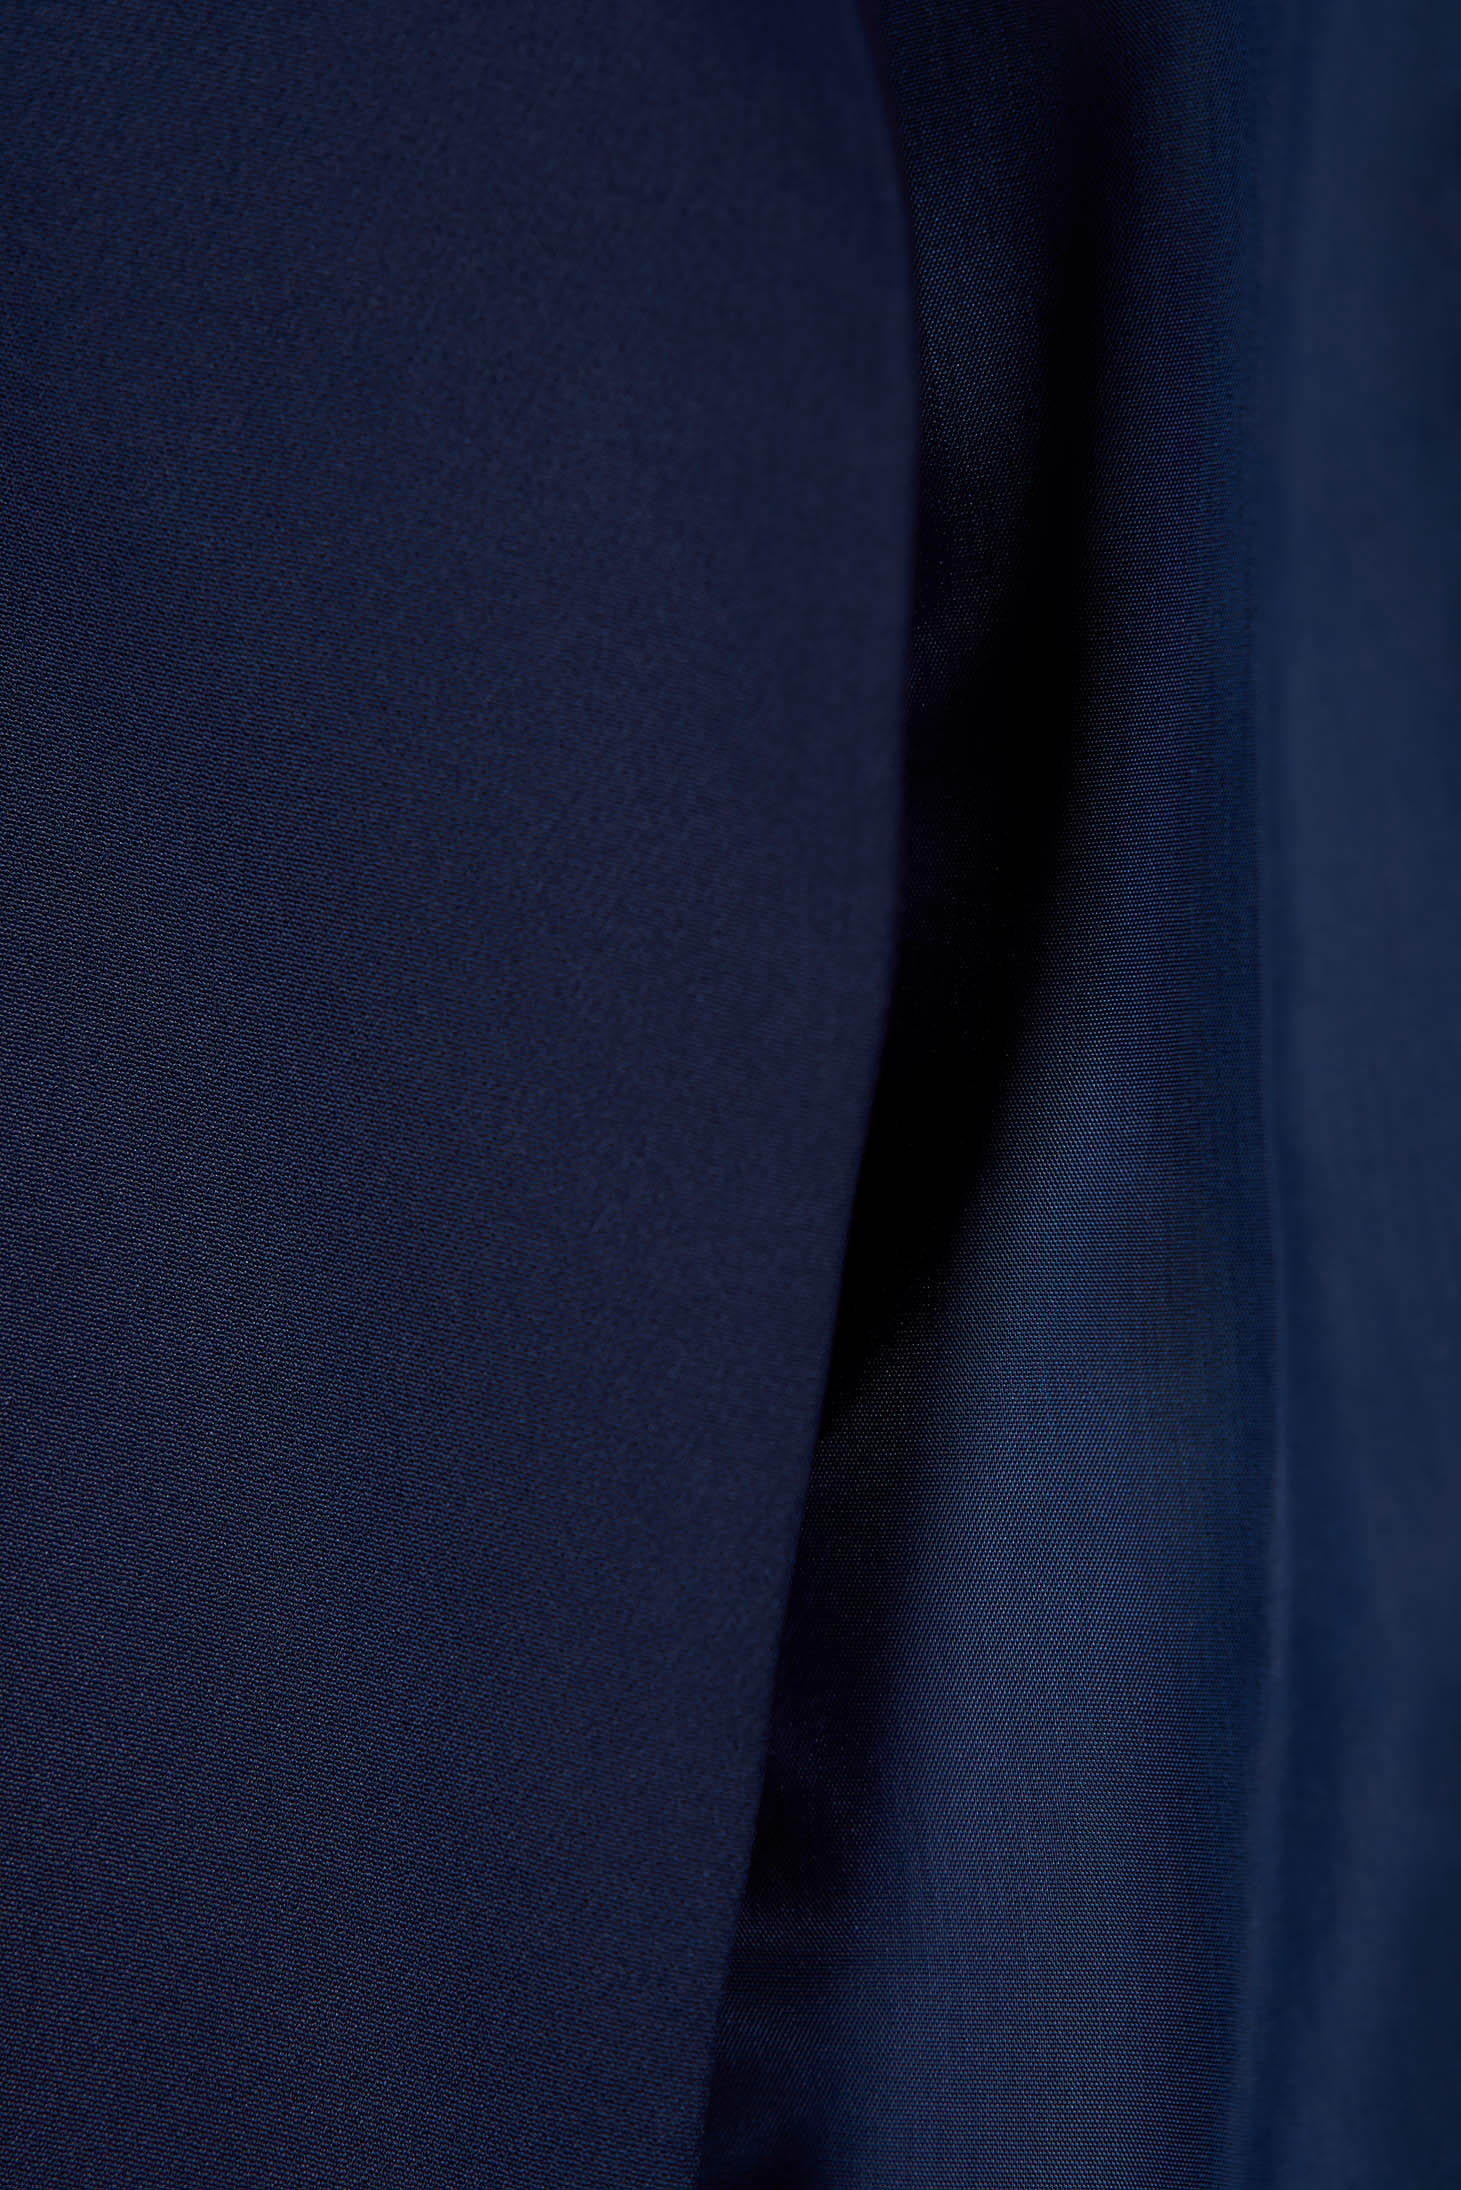 Pantaloni din stofa usor elastica bleumarin conici cu talie inalta - StarShinerS 5 - StarShinerS.ro